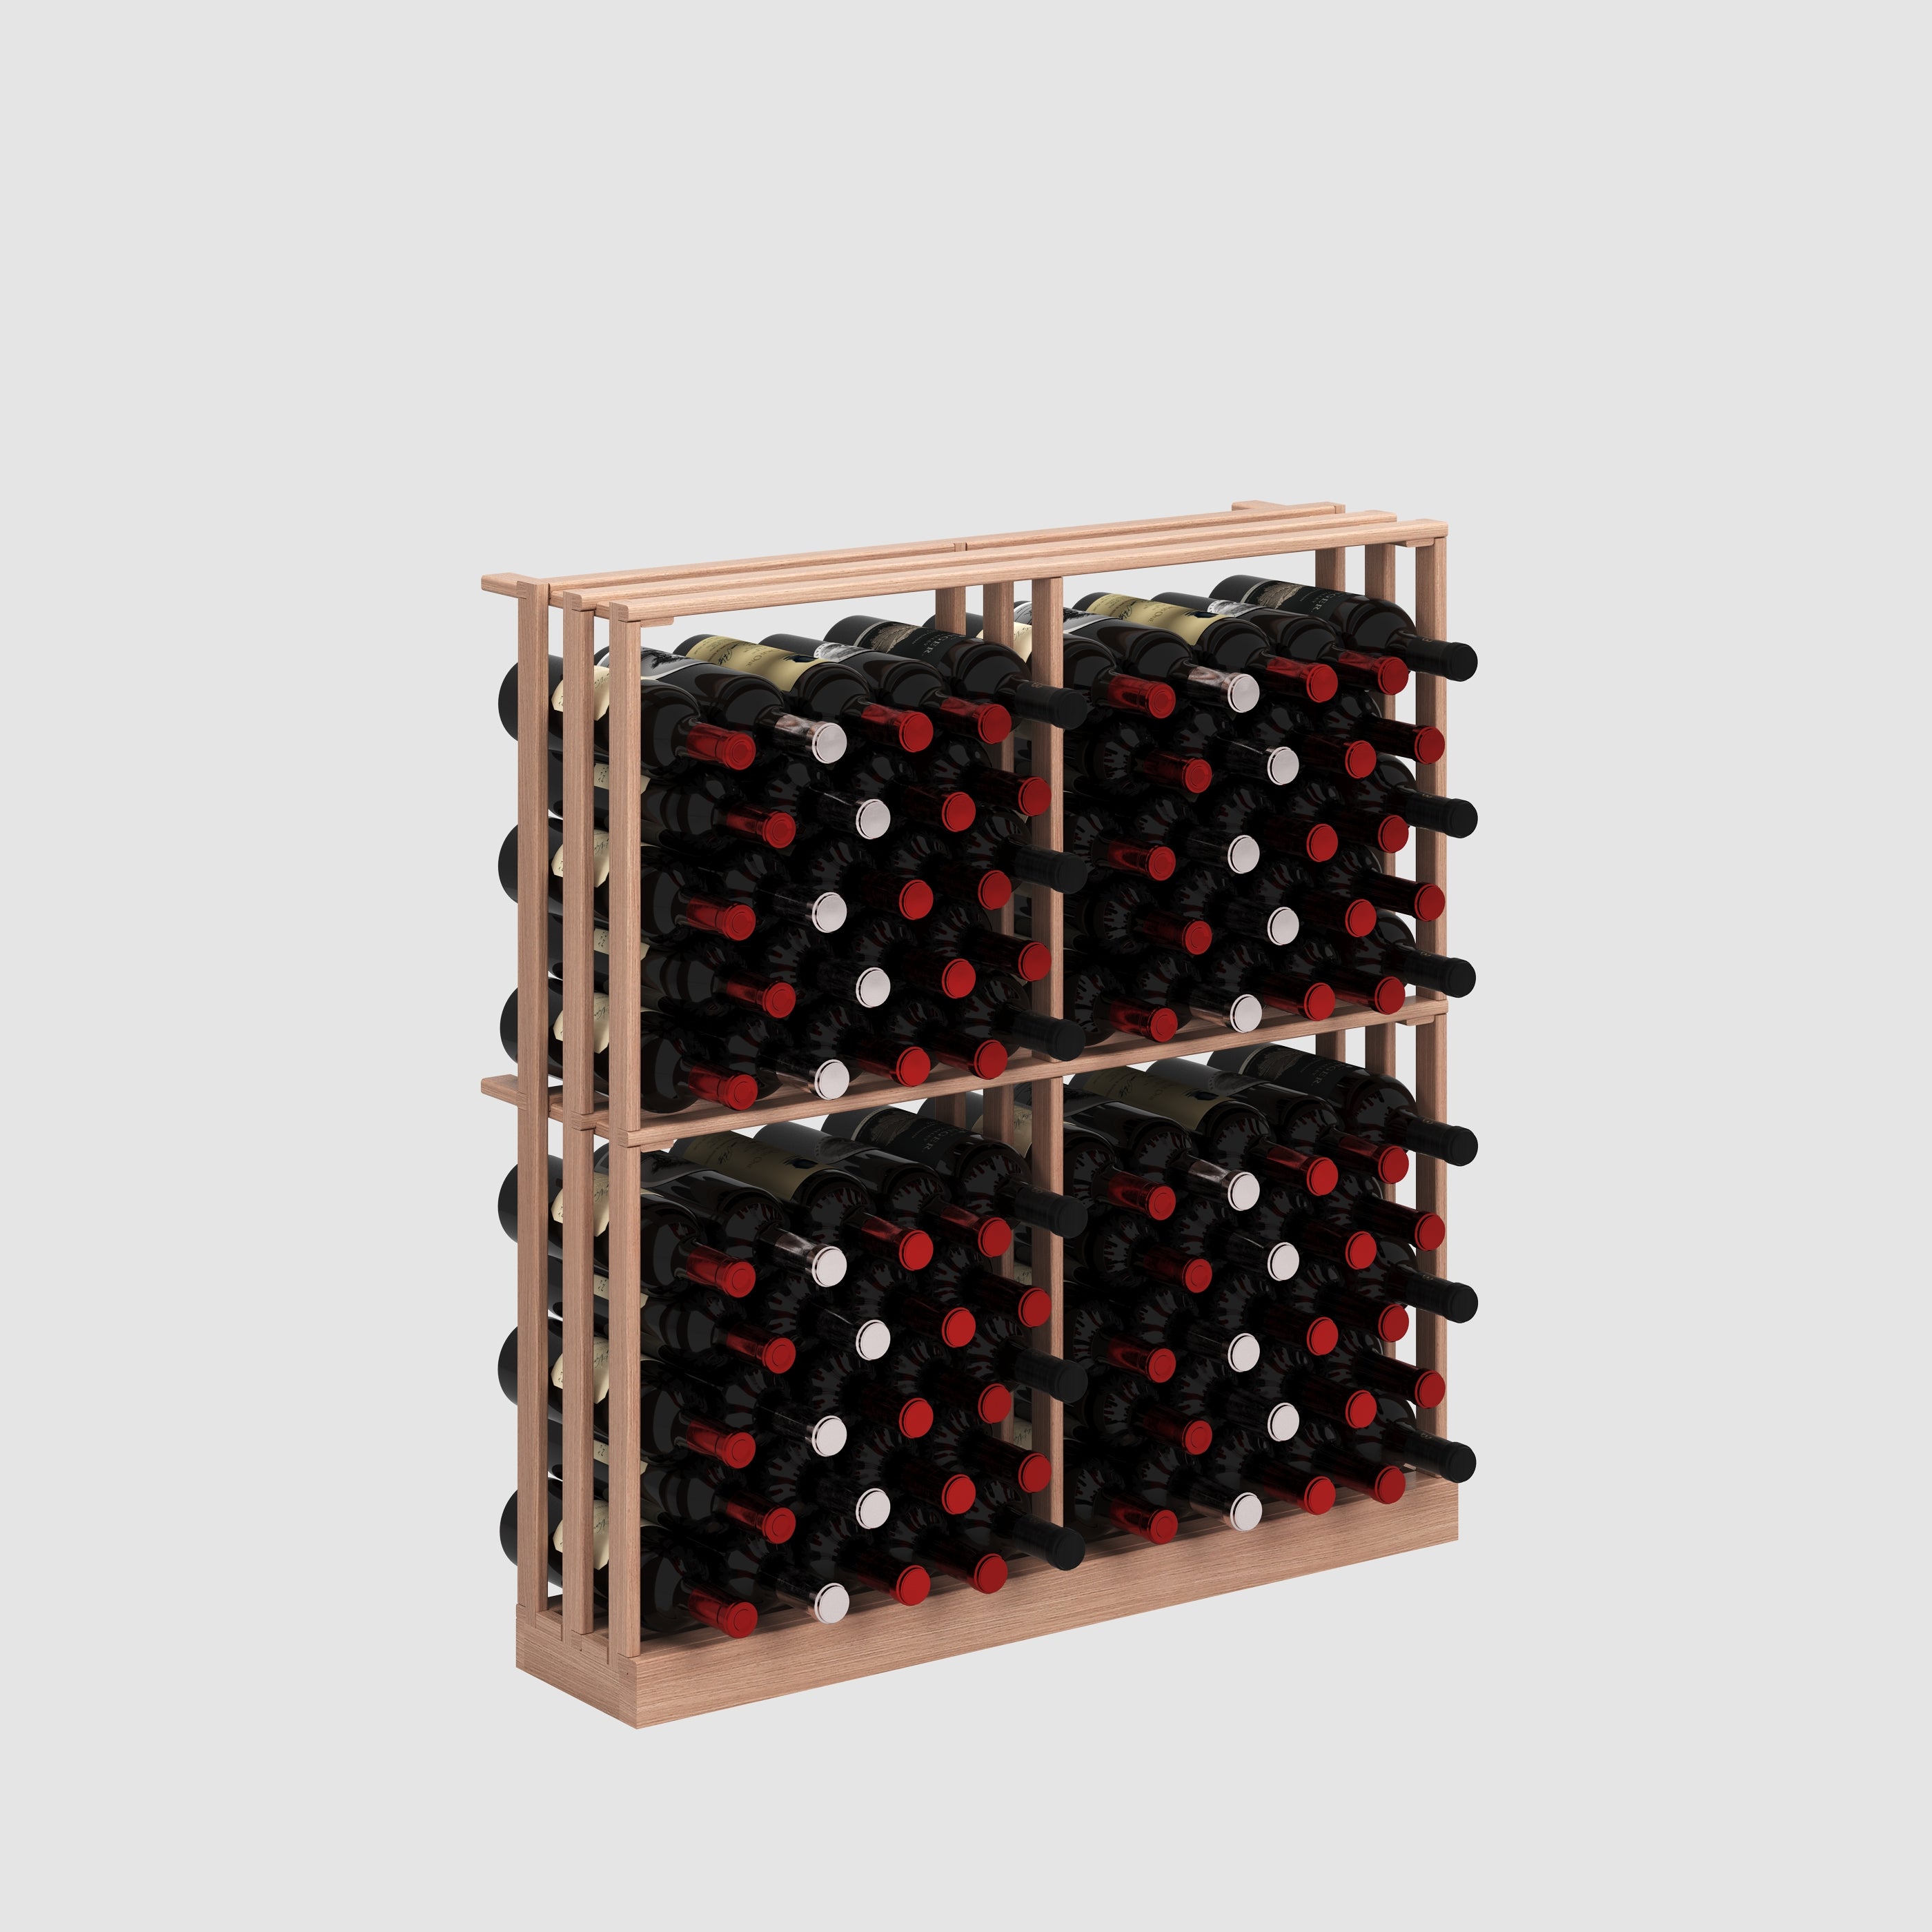 mahogany wine storage rack bin - 92 wine bottle capacity - Genuwine Cellars Reserve